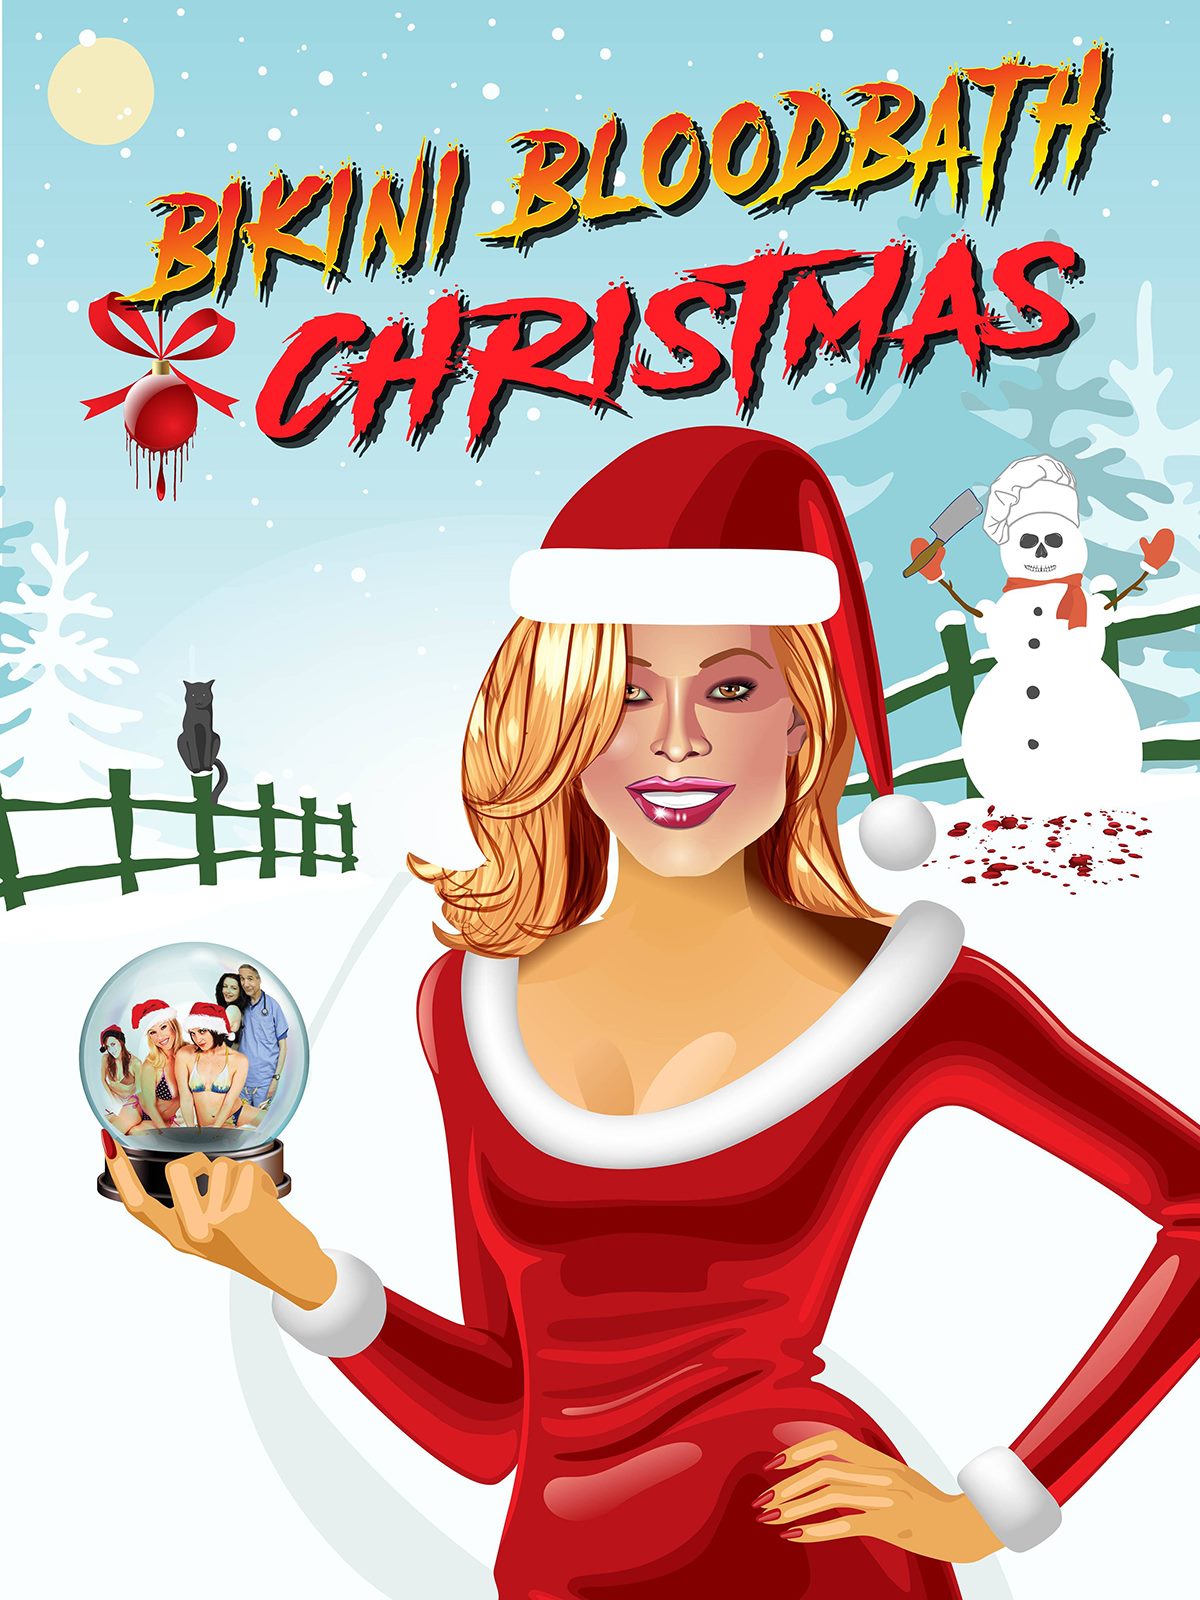 Bikini Bloodbath Christmas (2009) starring Debbie Rochon on DVD on DVD